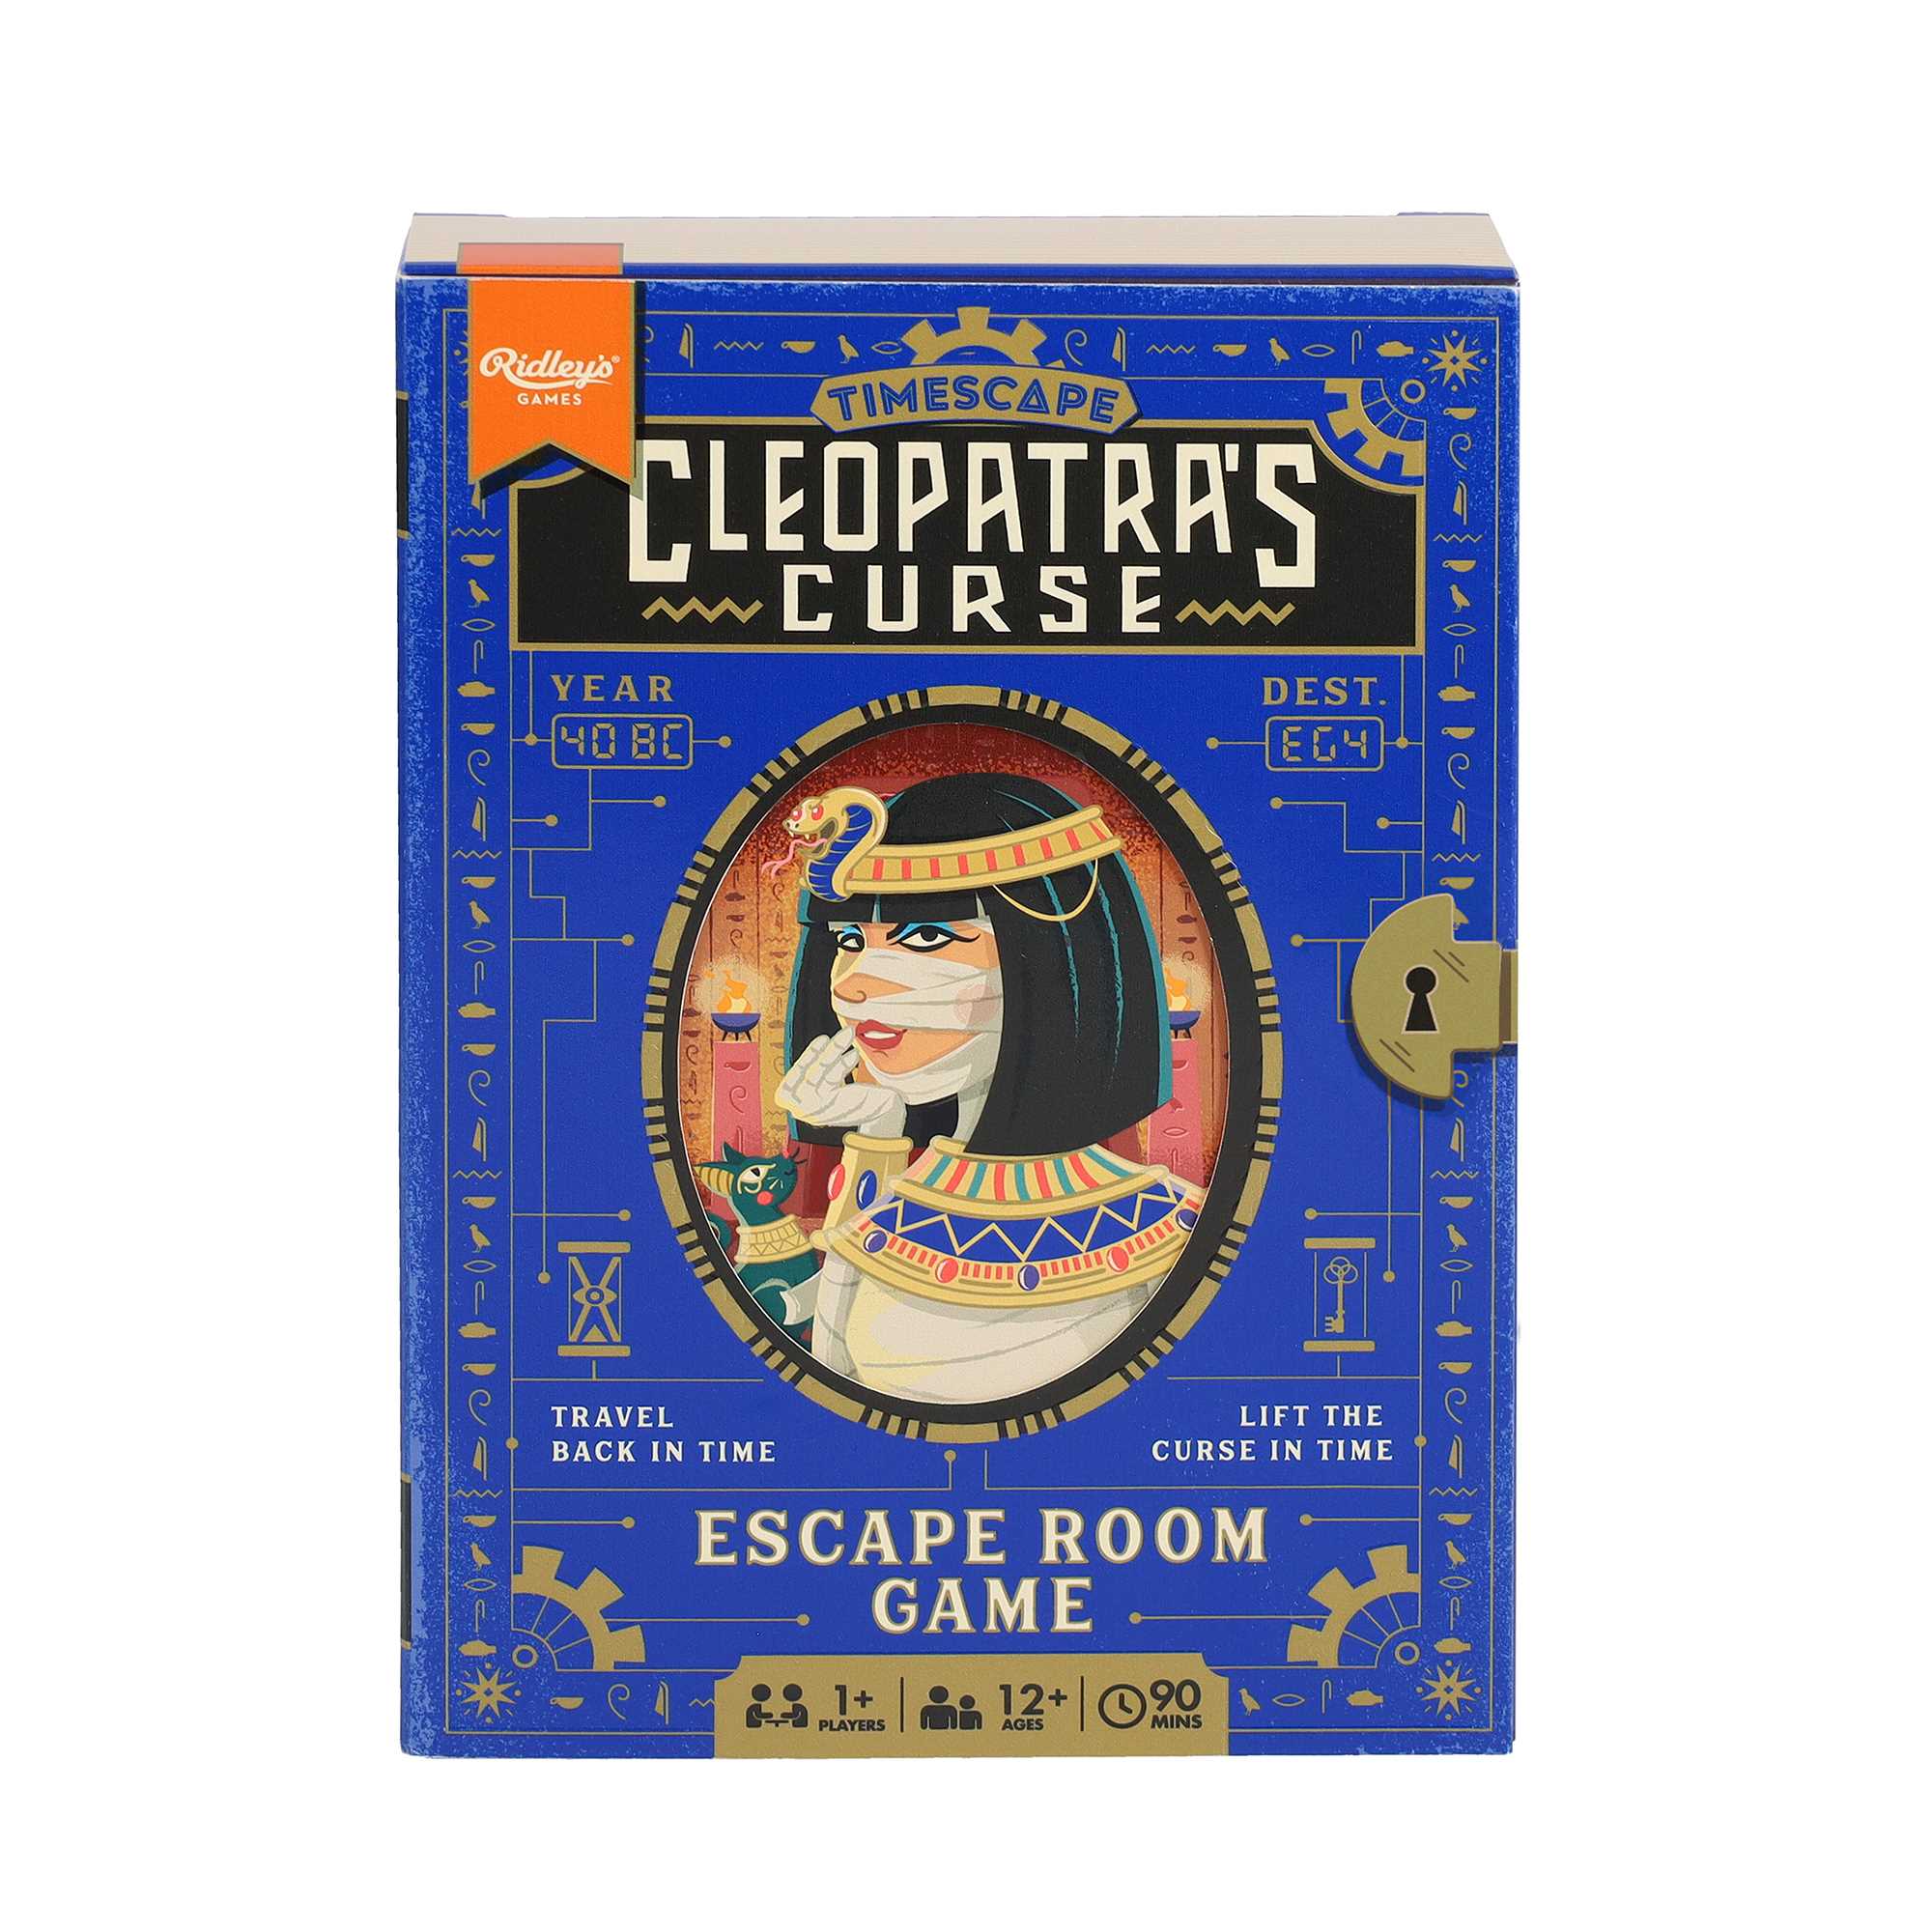 Cleopatra's Curse (Timescape)